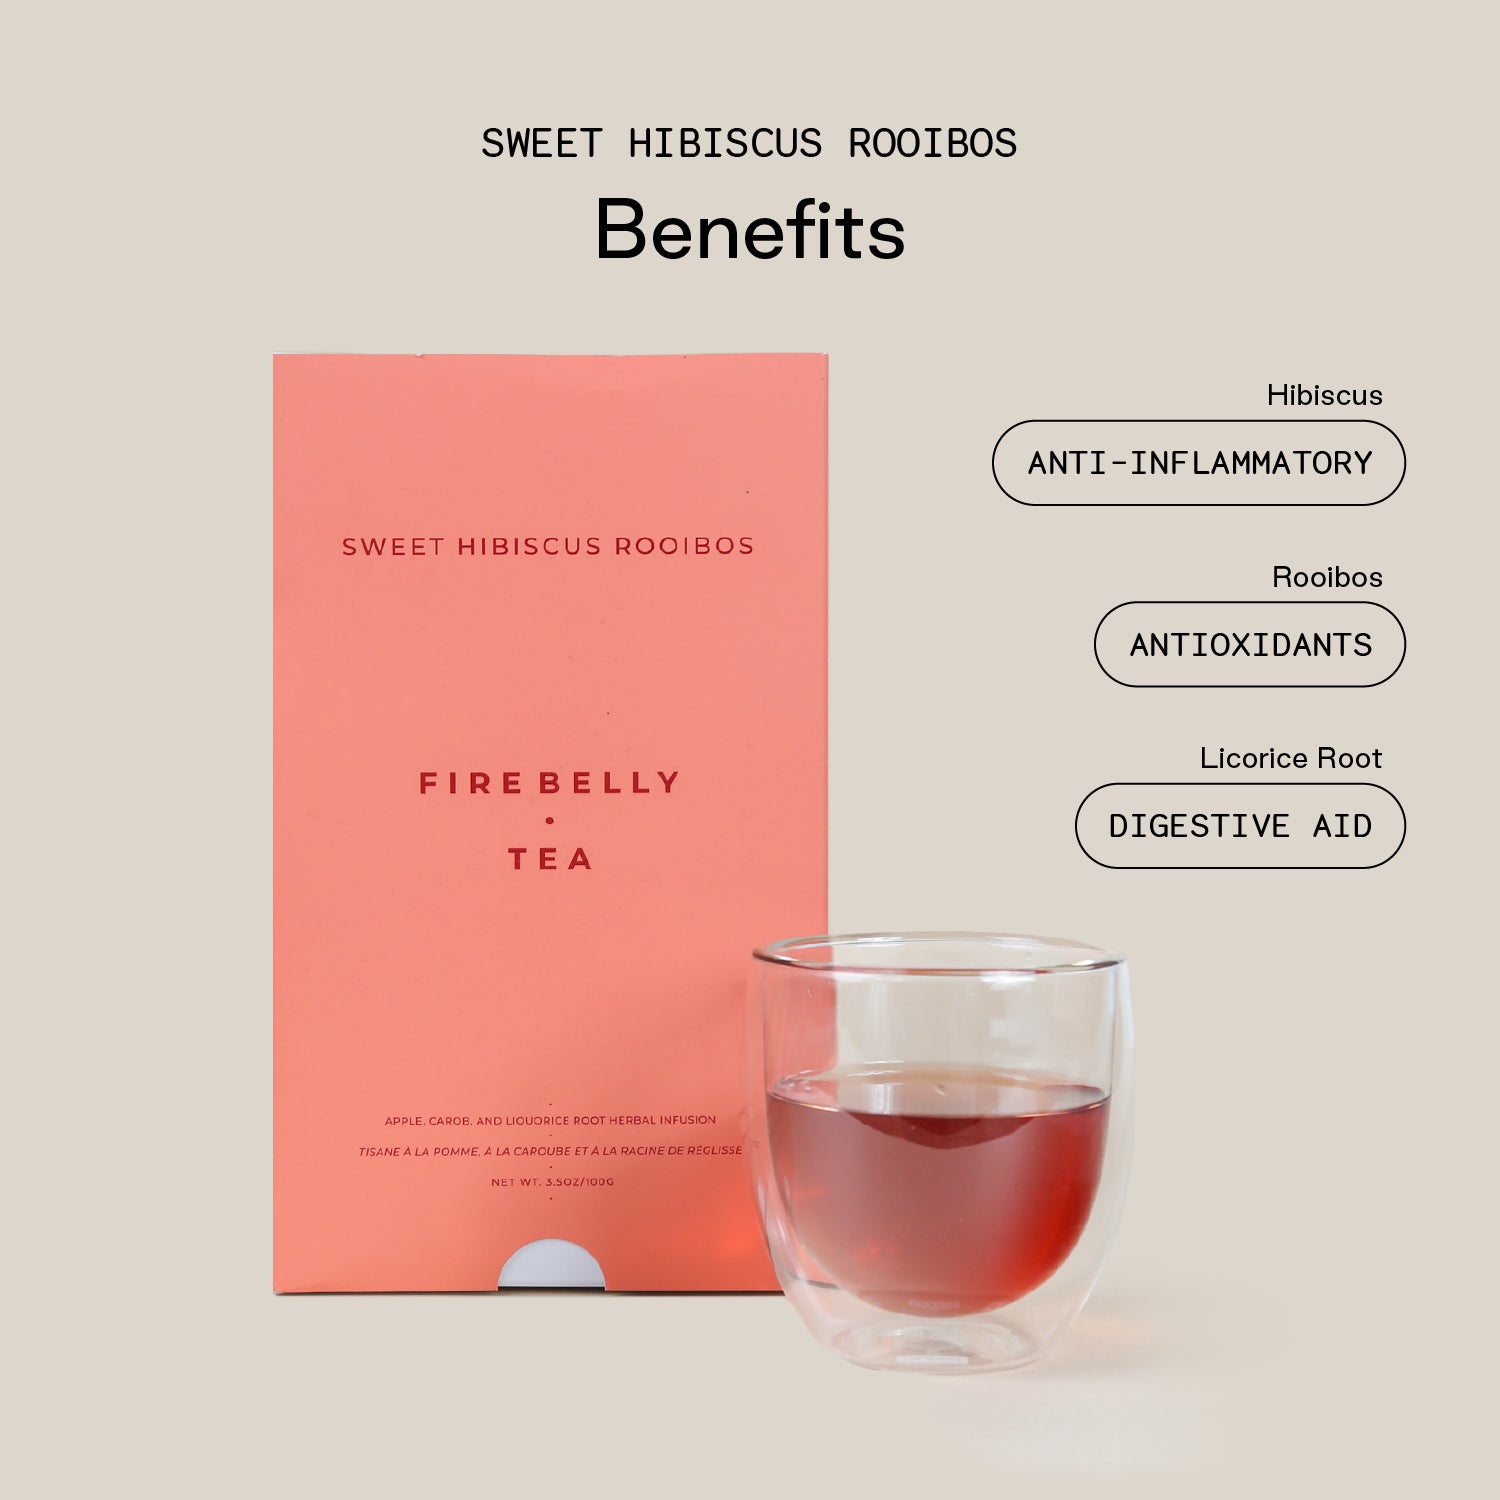 Sweet Hibiscus Rooibos - Firebelly Tea